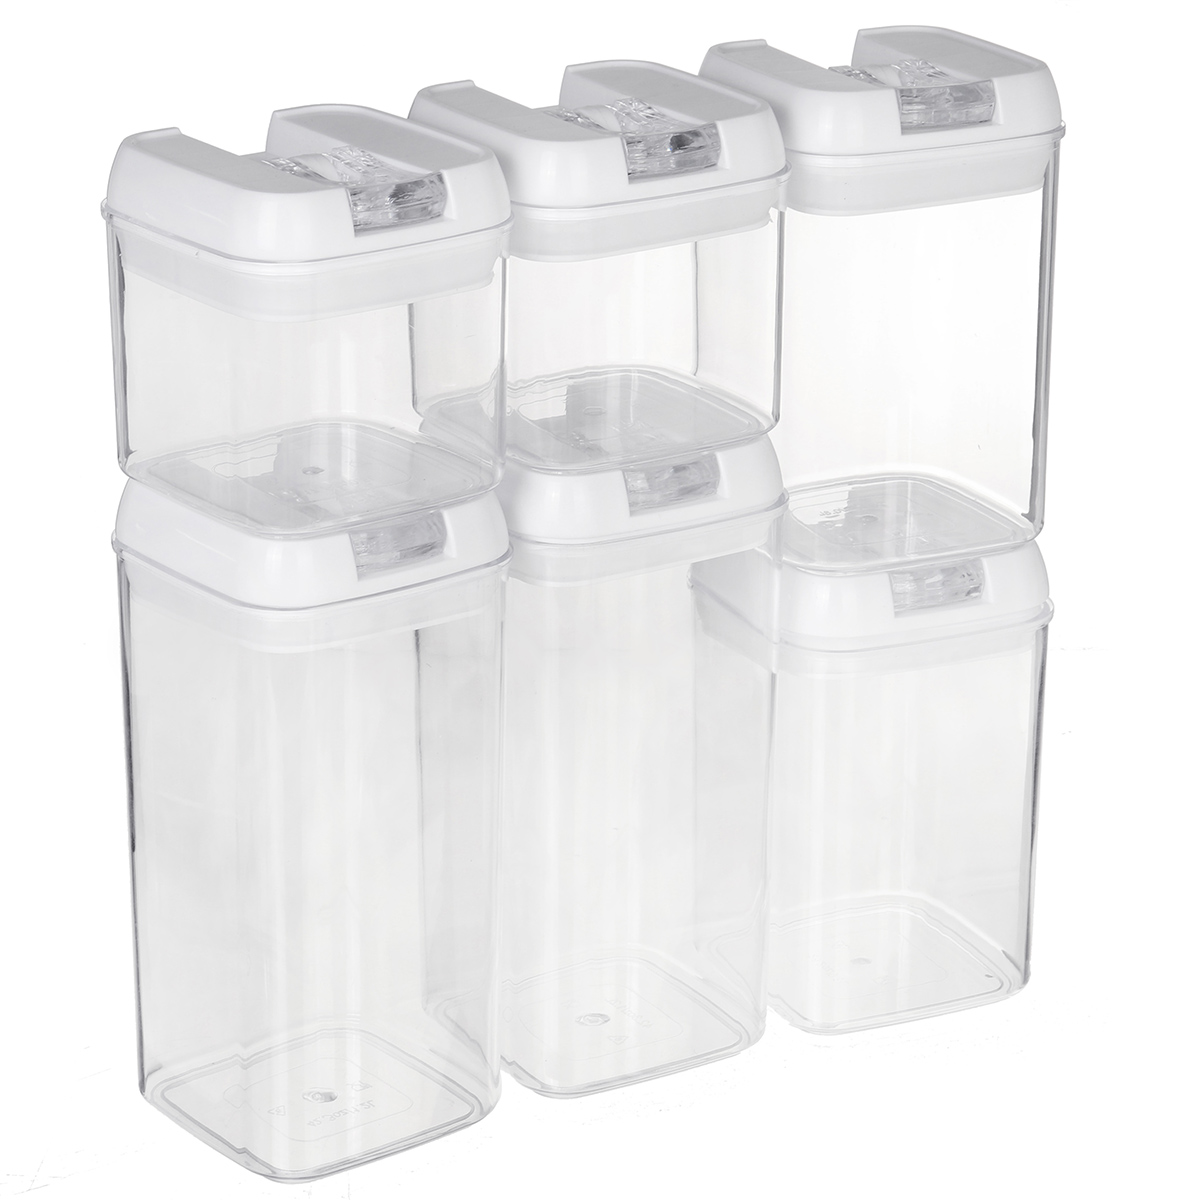 6pcs-Airtight-Refrigerator-Food-Container-Storage-with-Lock-Lids-Plastic-Transparent-Multigrain-Cont-1752734-23